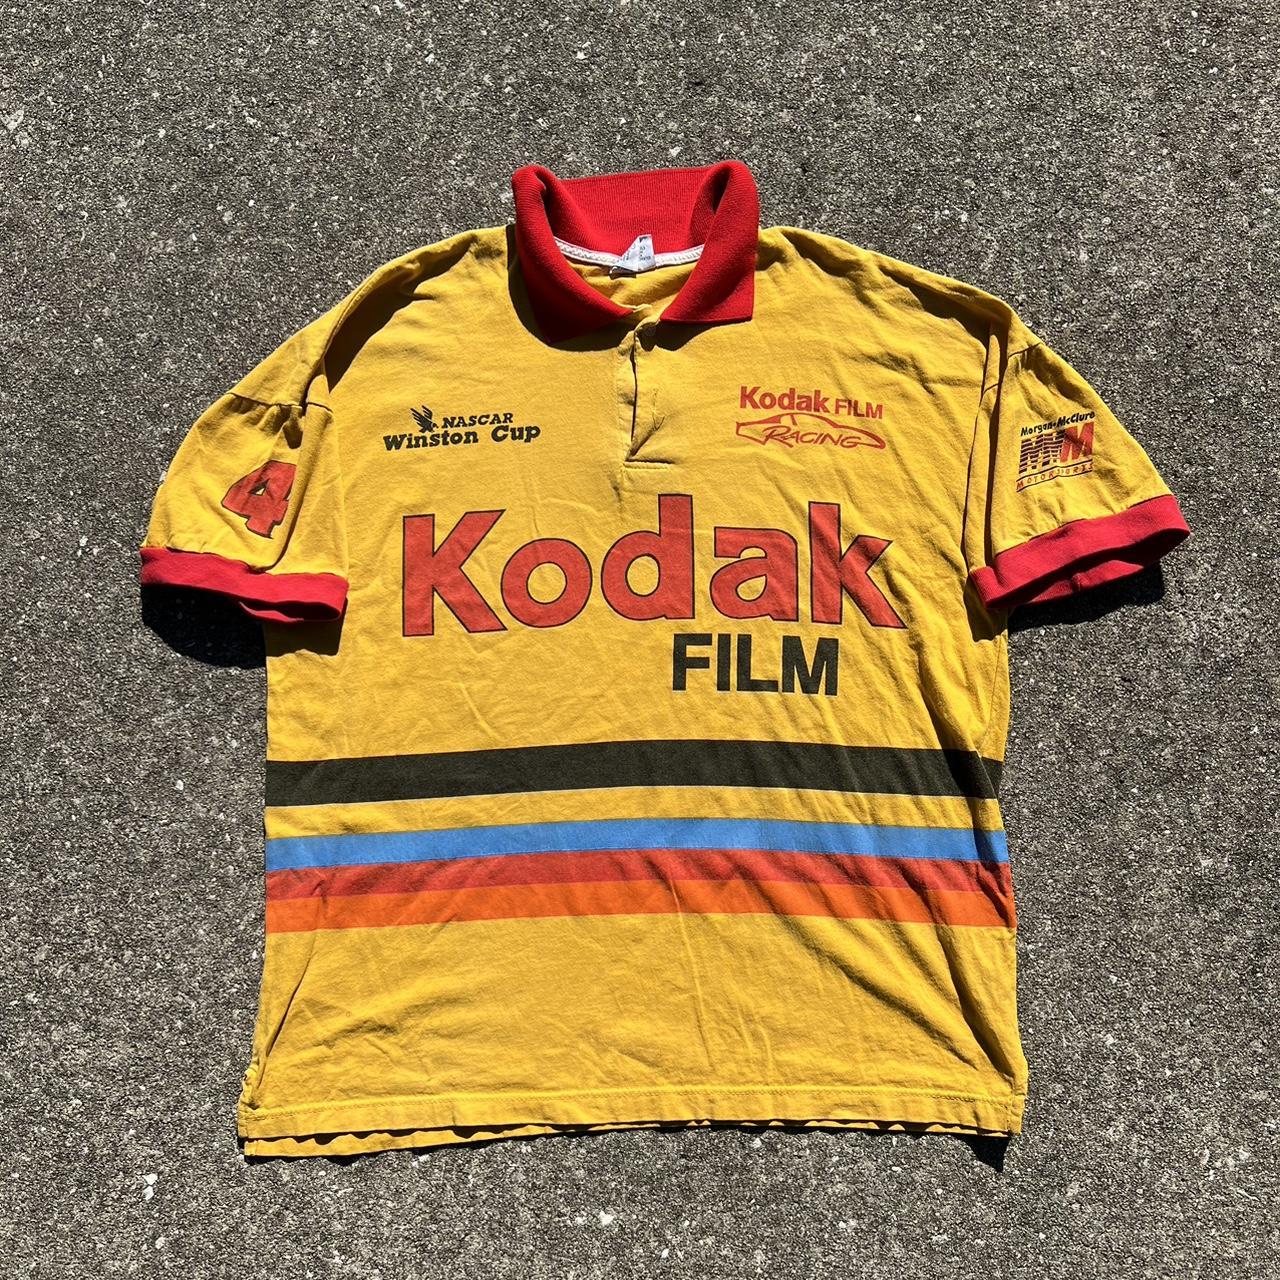 Kodak Men's Yellow and Red Polo-shirts